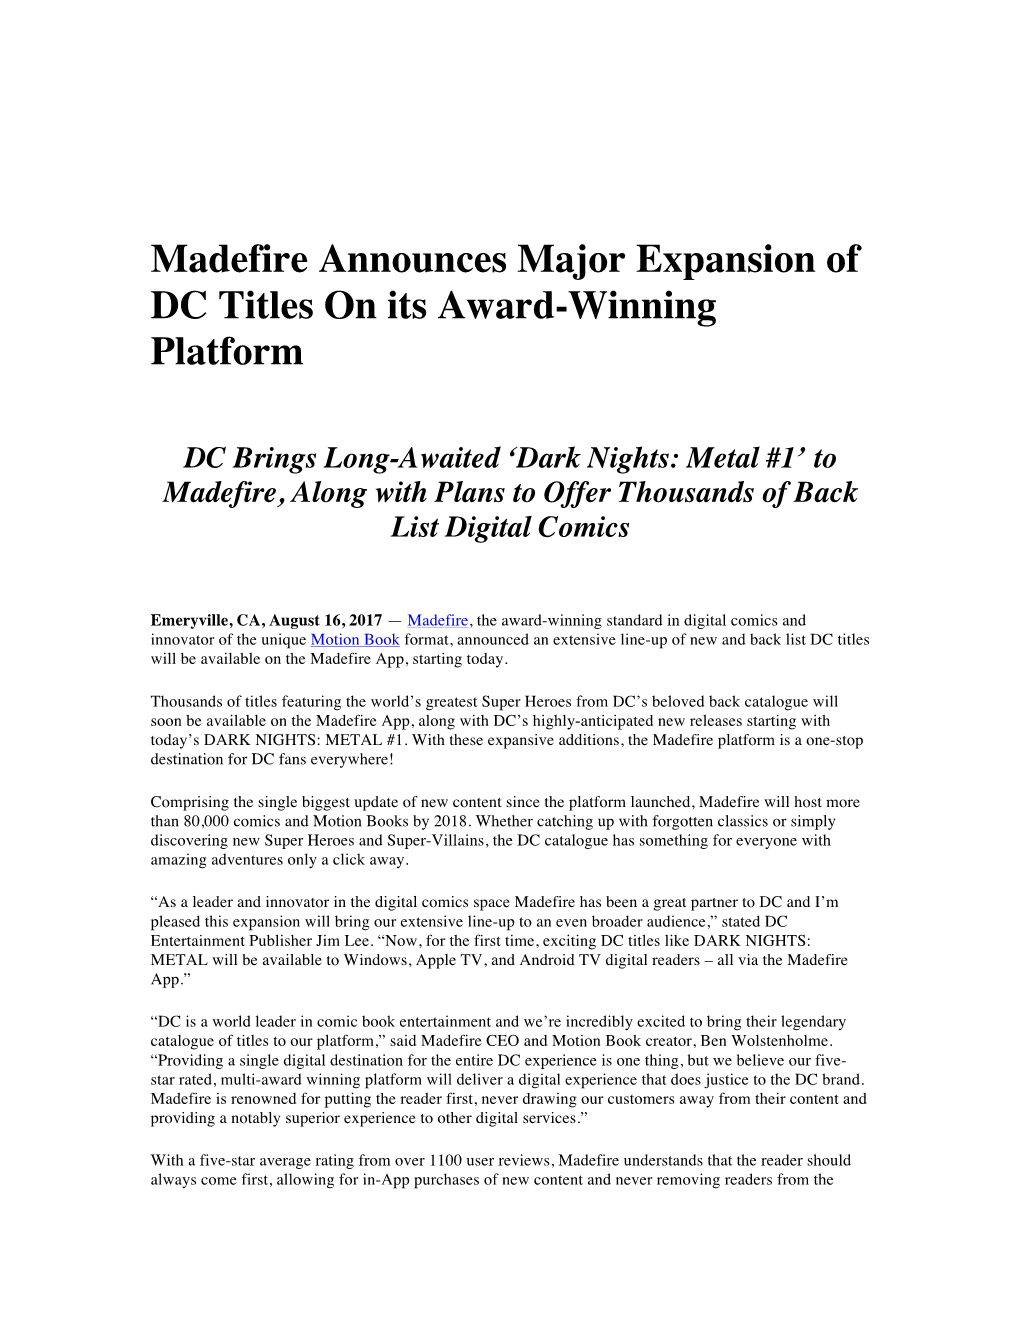 Madefire Announces Major Expansion of DC Titles on Its Award-Winning Platform